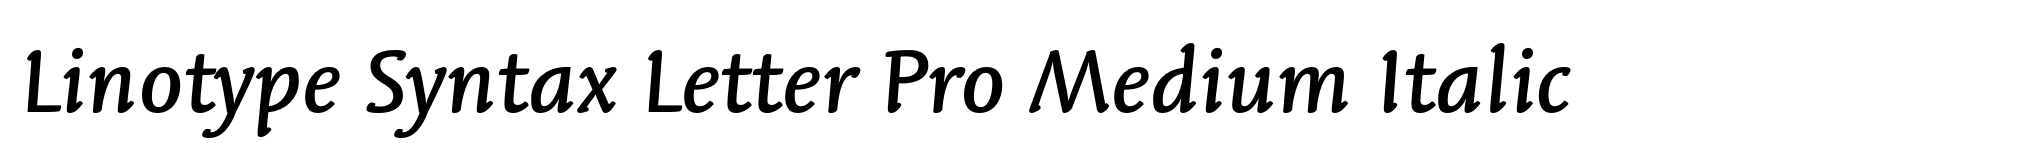 Linotype Syntax Letter Pro Medium Italic image